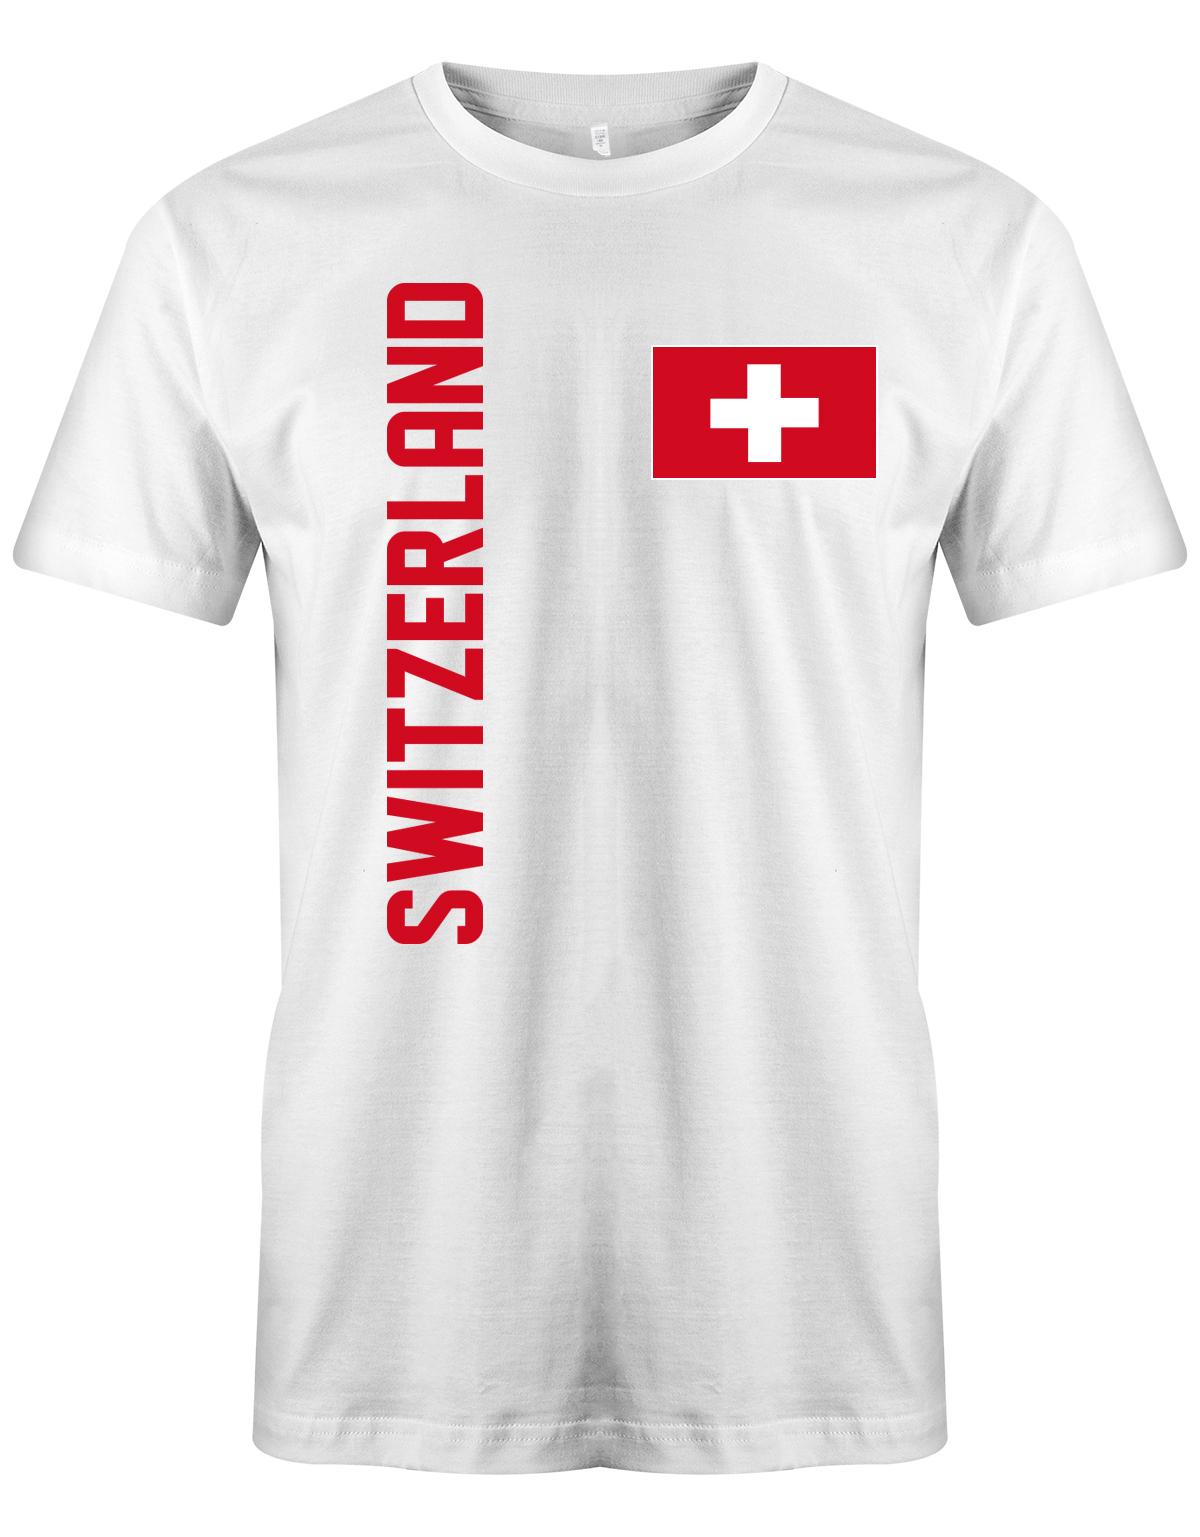 Switzerland-Fahne-Shirt-Herren-Weiss